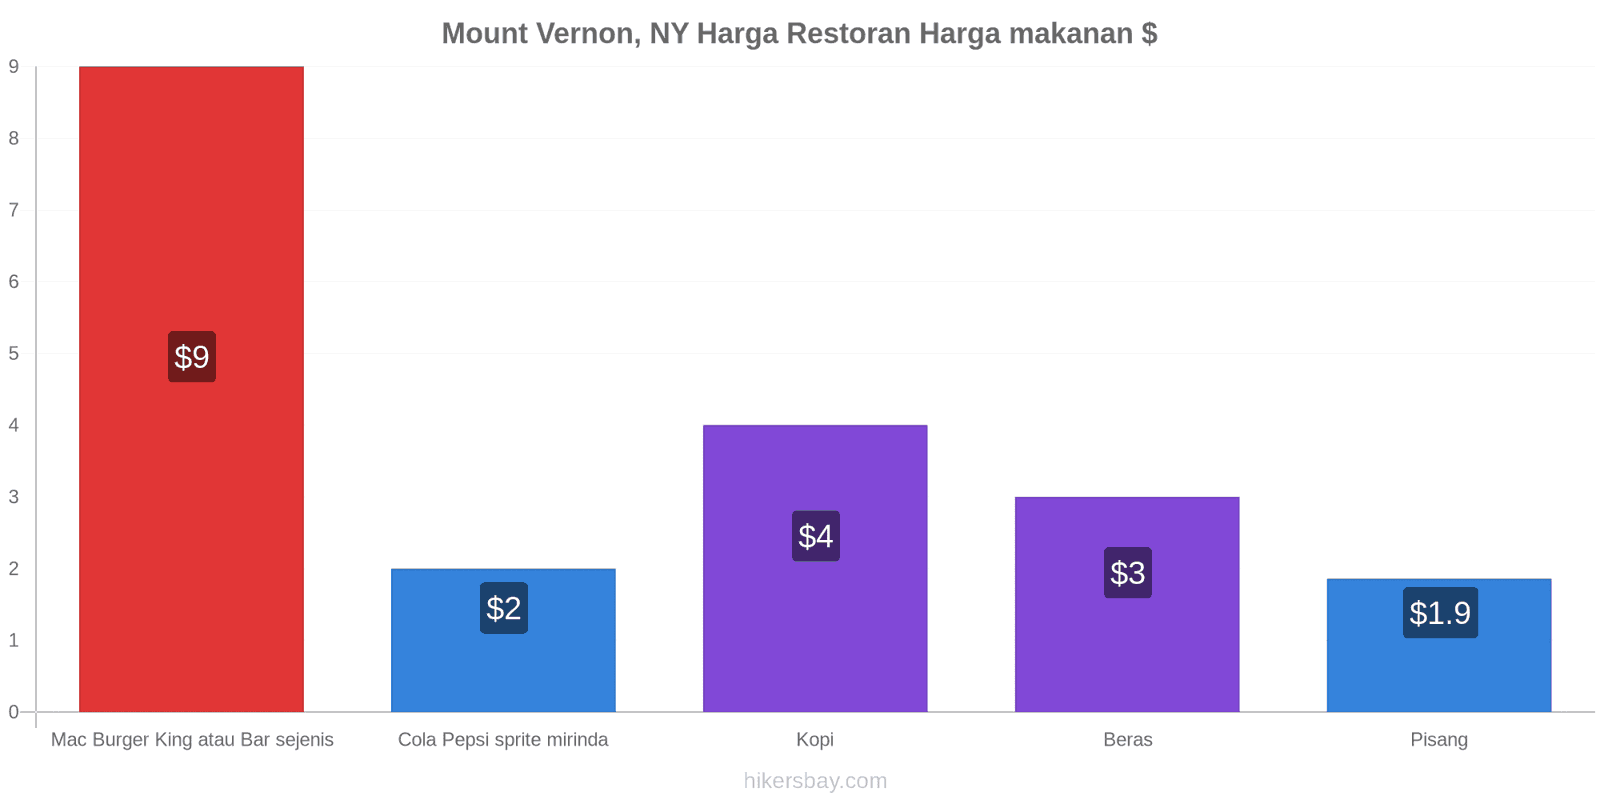 Mount Vernon, NY perubahan harga hikersbay.com